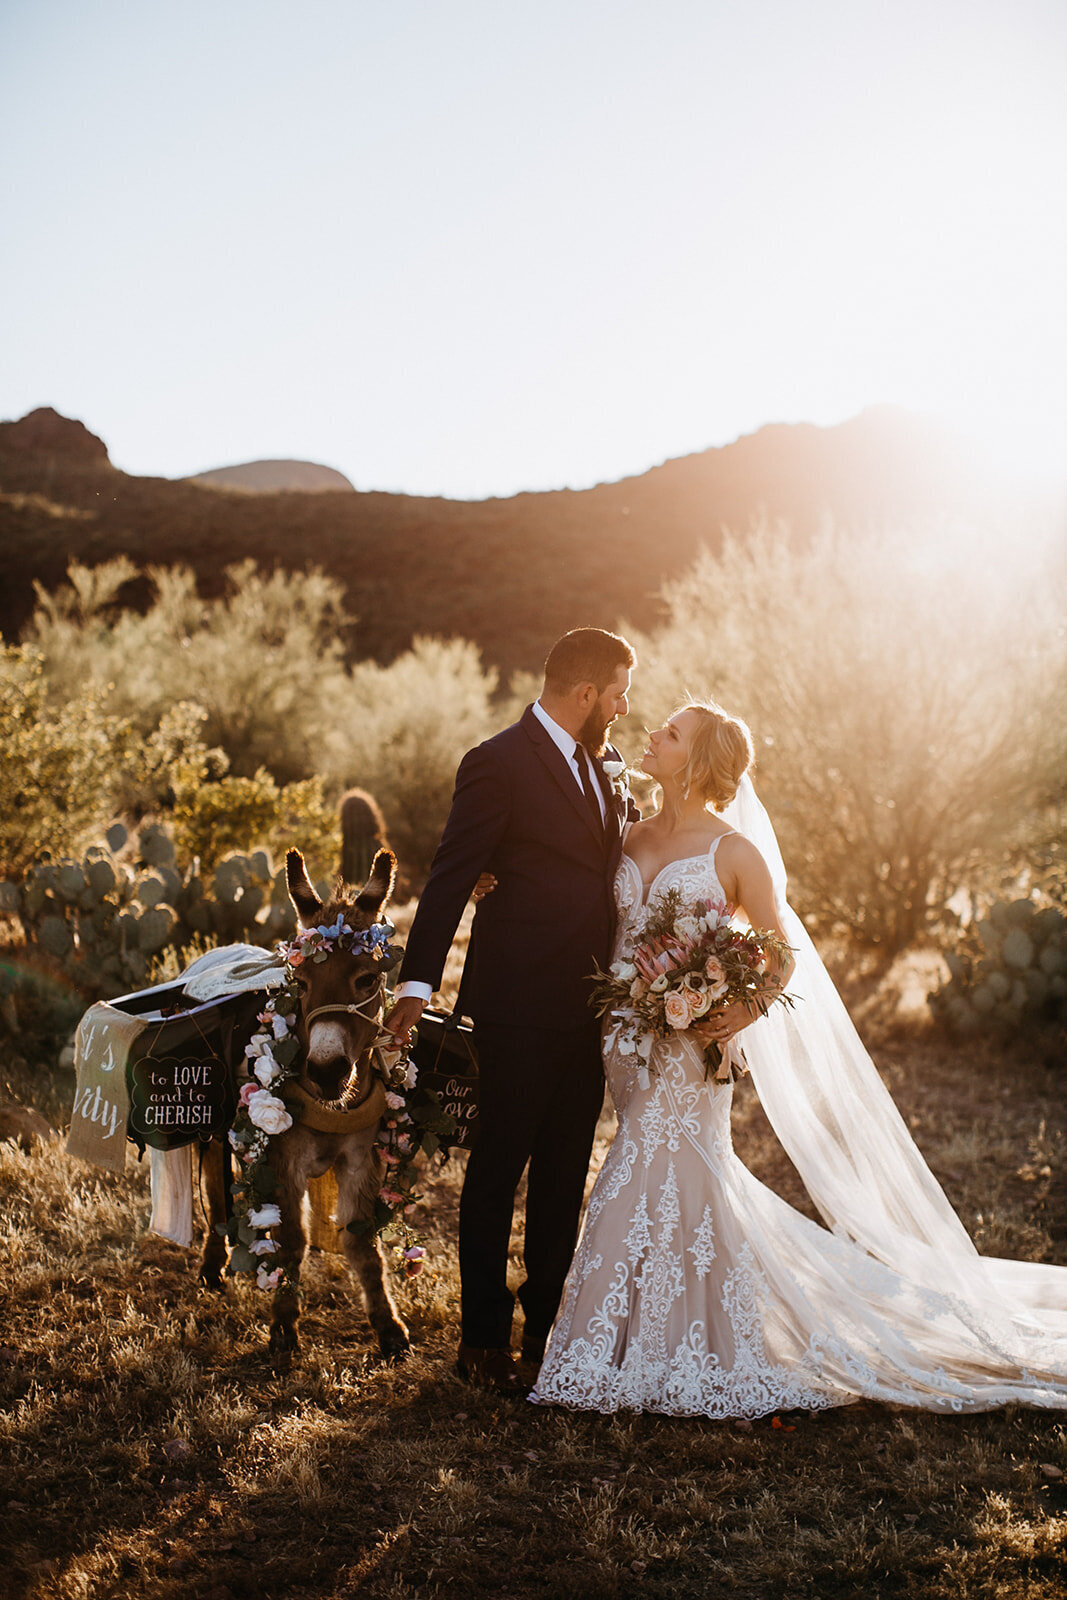 Liz+Osban+Photography+Wyoming+Wedding+Photographer+Colorado+Elopement+Iceland+Tucson+Arizona+Stardance+Event+Center+Phoenix+Wedding+Burros+Donkeys+Elope+Desrt+Rocky+Mountain+Bride+6